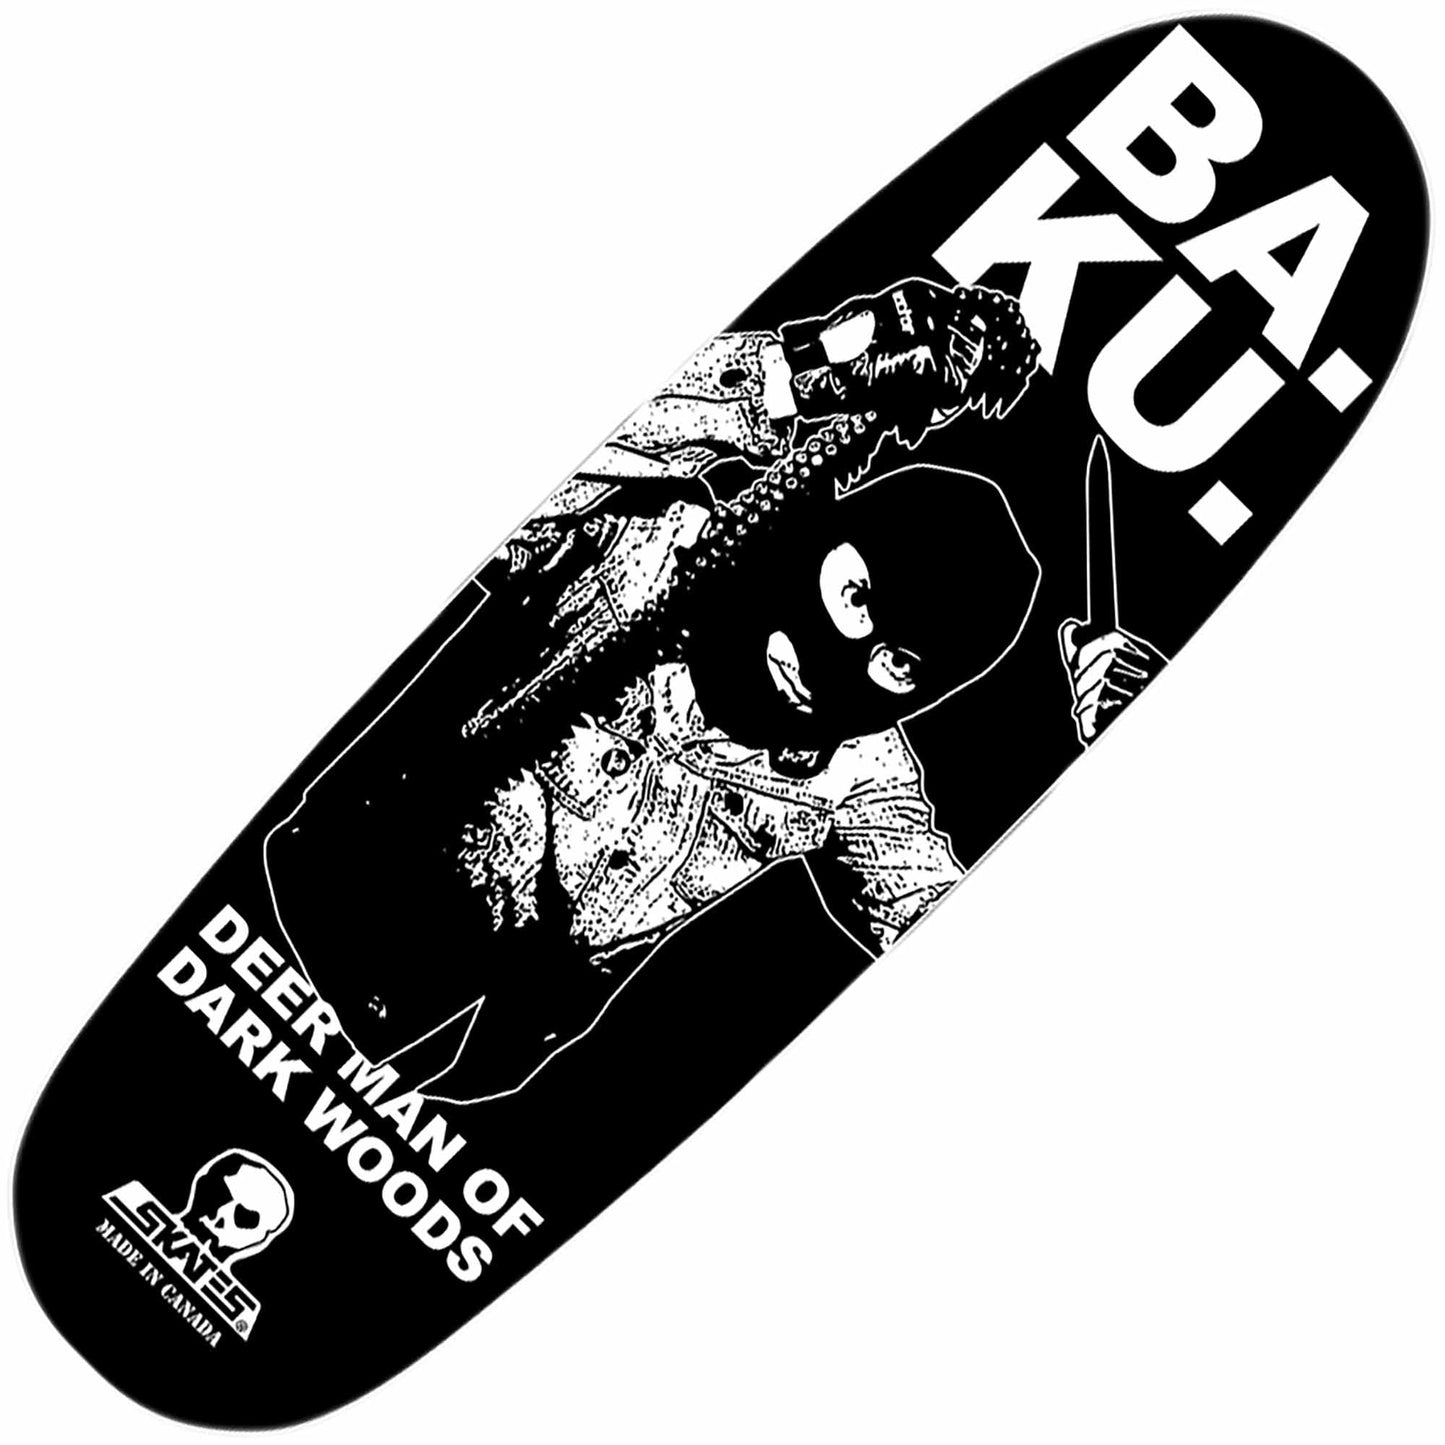 Skull Skates BA. KU. DMODW Damned Jacket Football Deck (10”) - Tiki Room Skateboards - 1